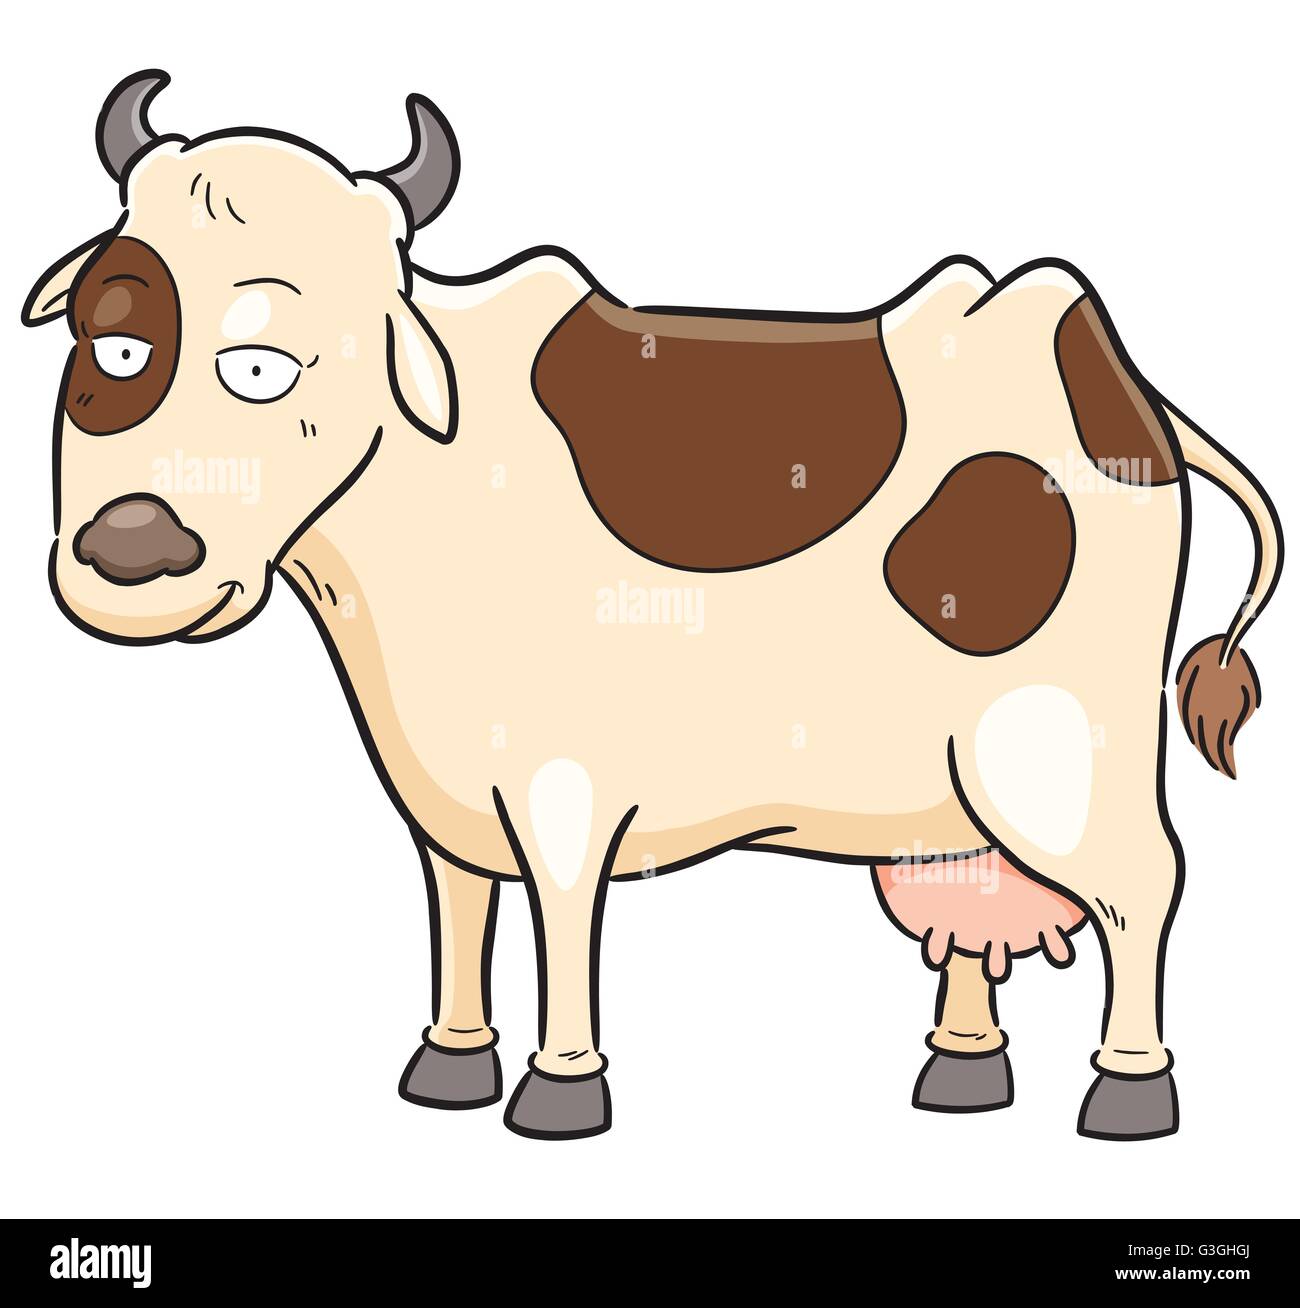 Illustrazione Vettoriale di Cartoon mucca Illustrazione Vettoriale